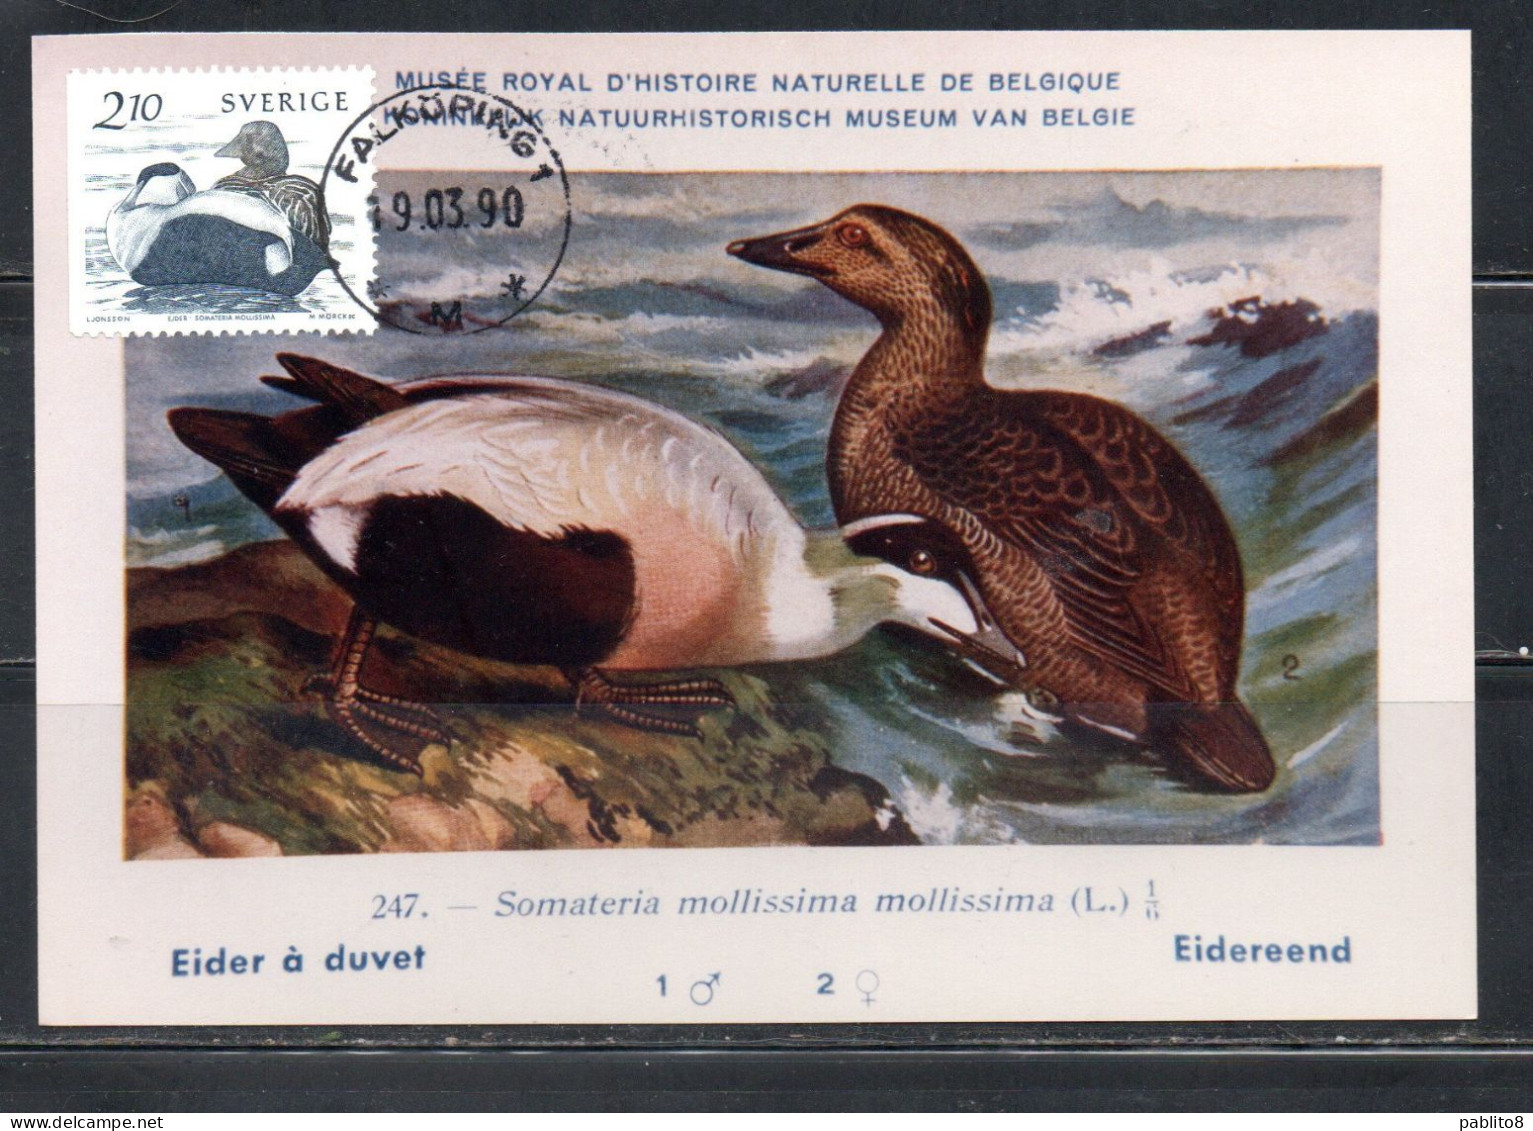 SWEDEN SVERIGE SVEZIA SUEDE 1986 NATURAL MUSEUM BIRD FAUNA WATERBIRDS EIDER 2.10k MAXI MAXIMUM CARD CARTE - Maximum Cards & Covers